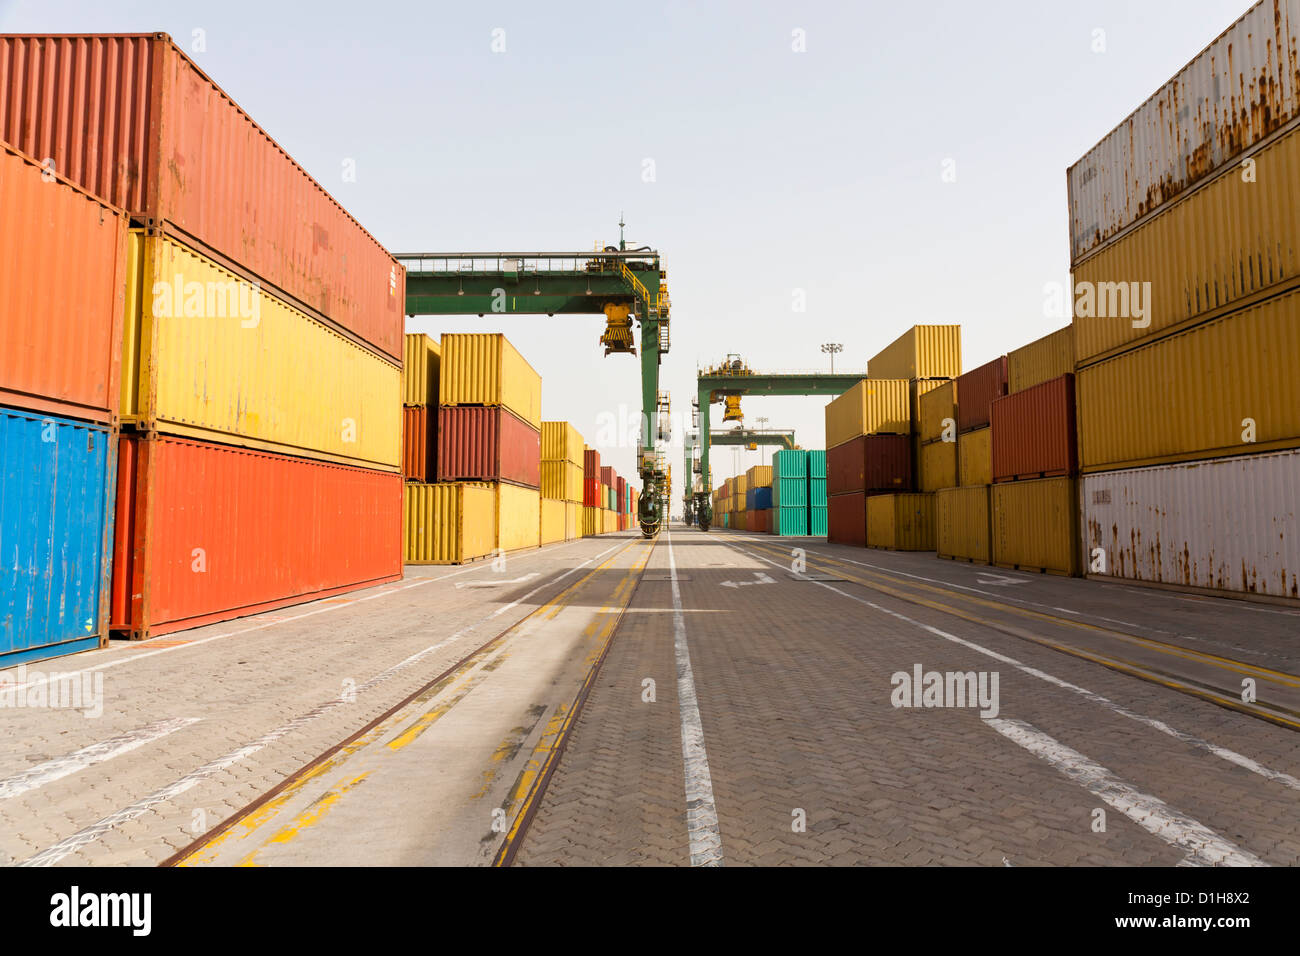 Cargo container harbor Stock Photo